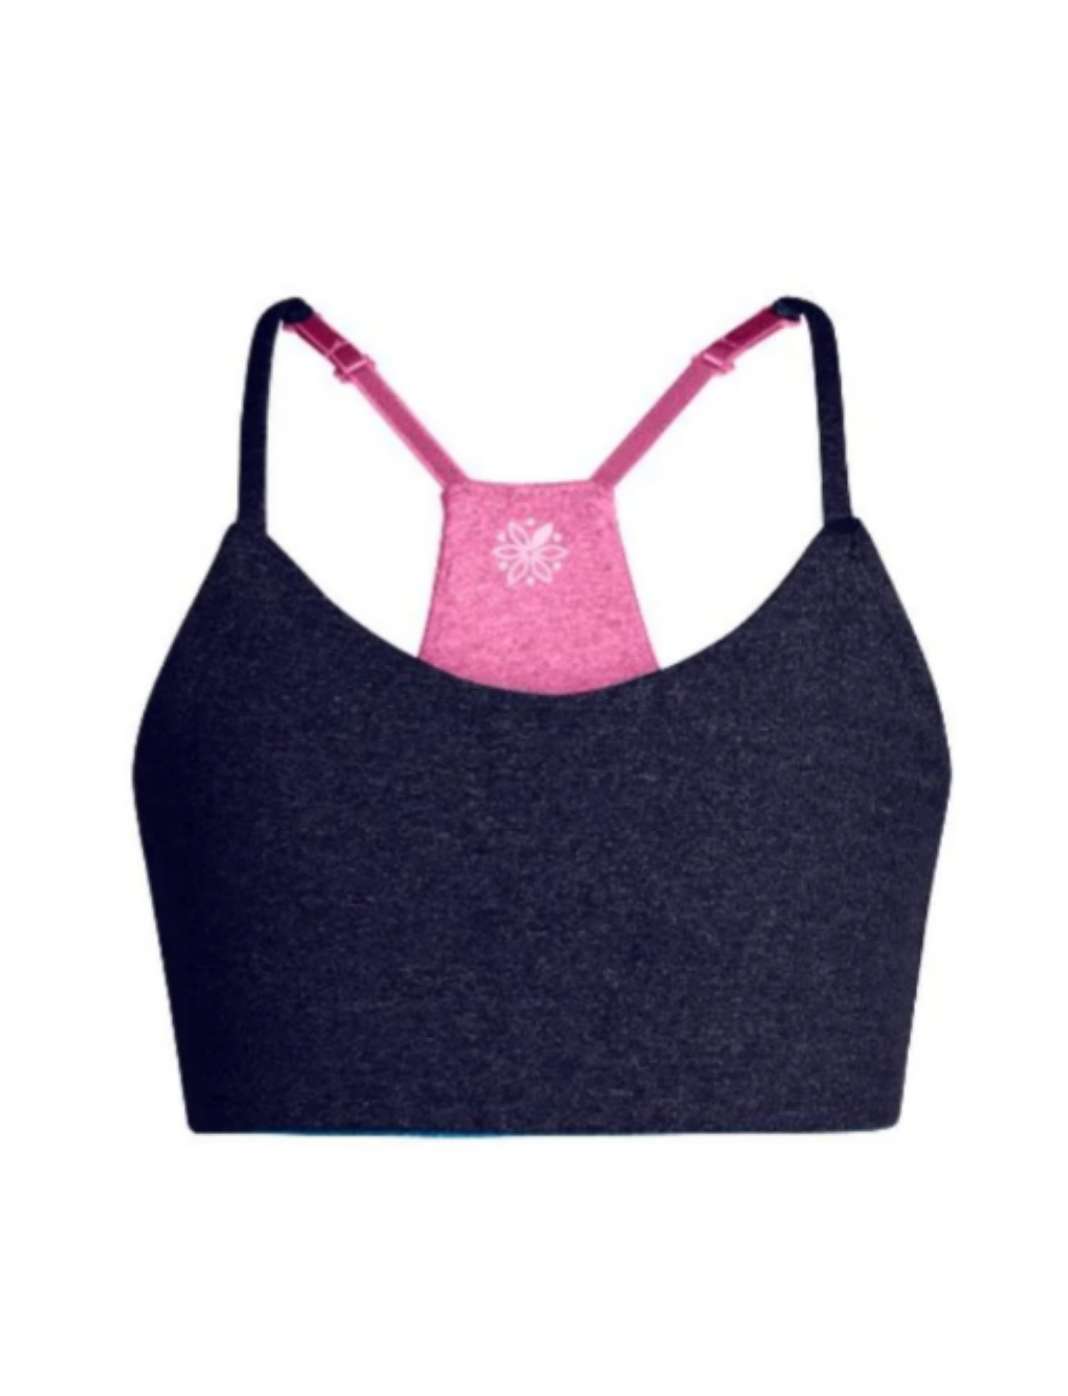 New Pink Victorias Secret Gray Black Soft Cotton Blend Sports Bra XS